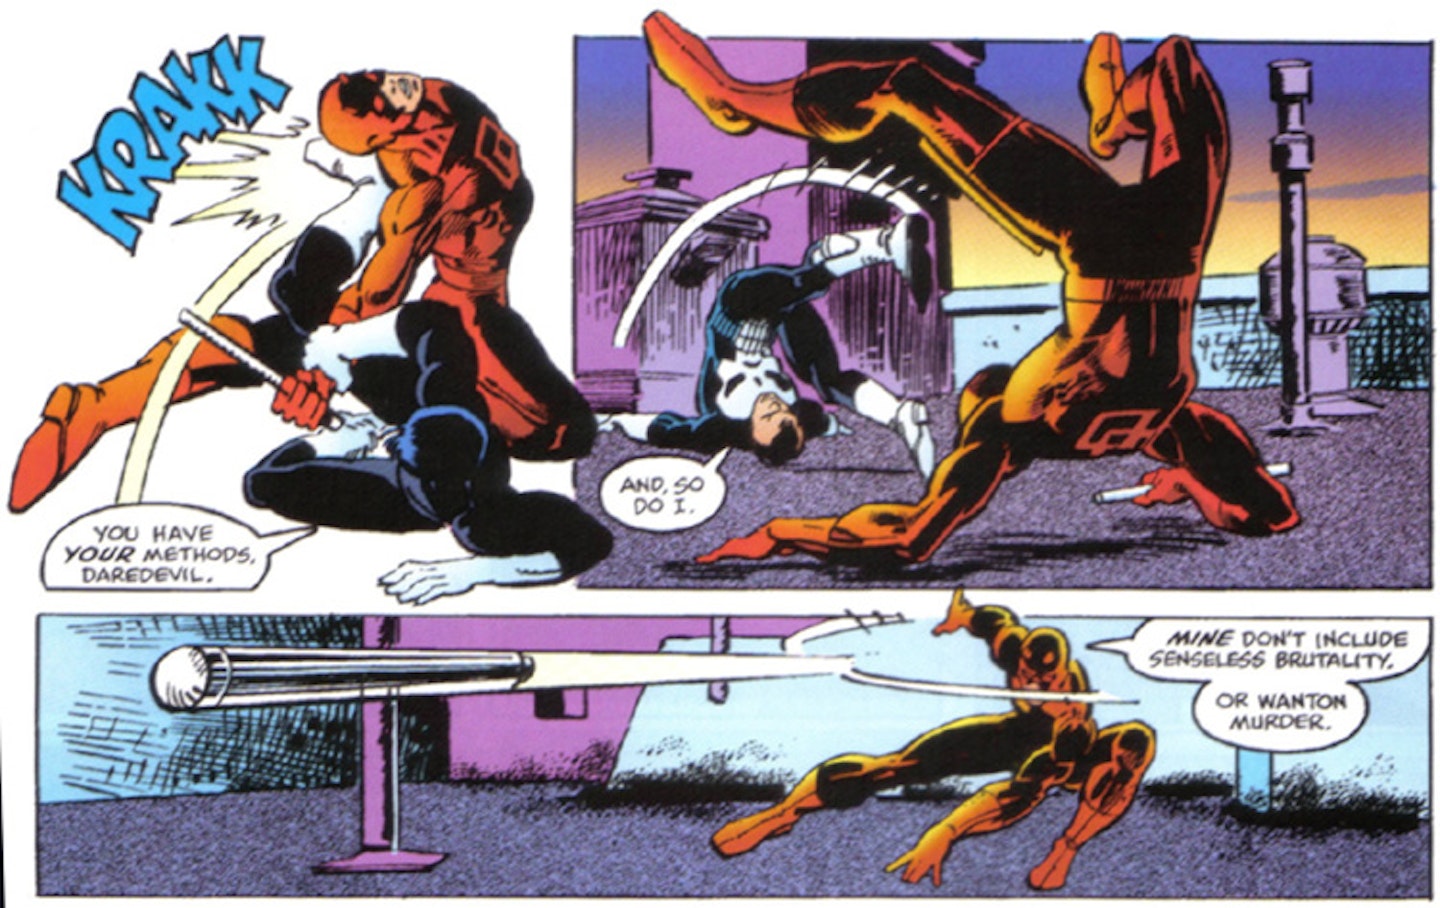 The Punisher meets Daredevil in Frank Miller's comics